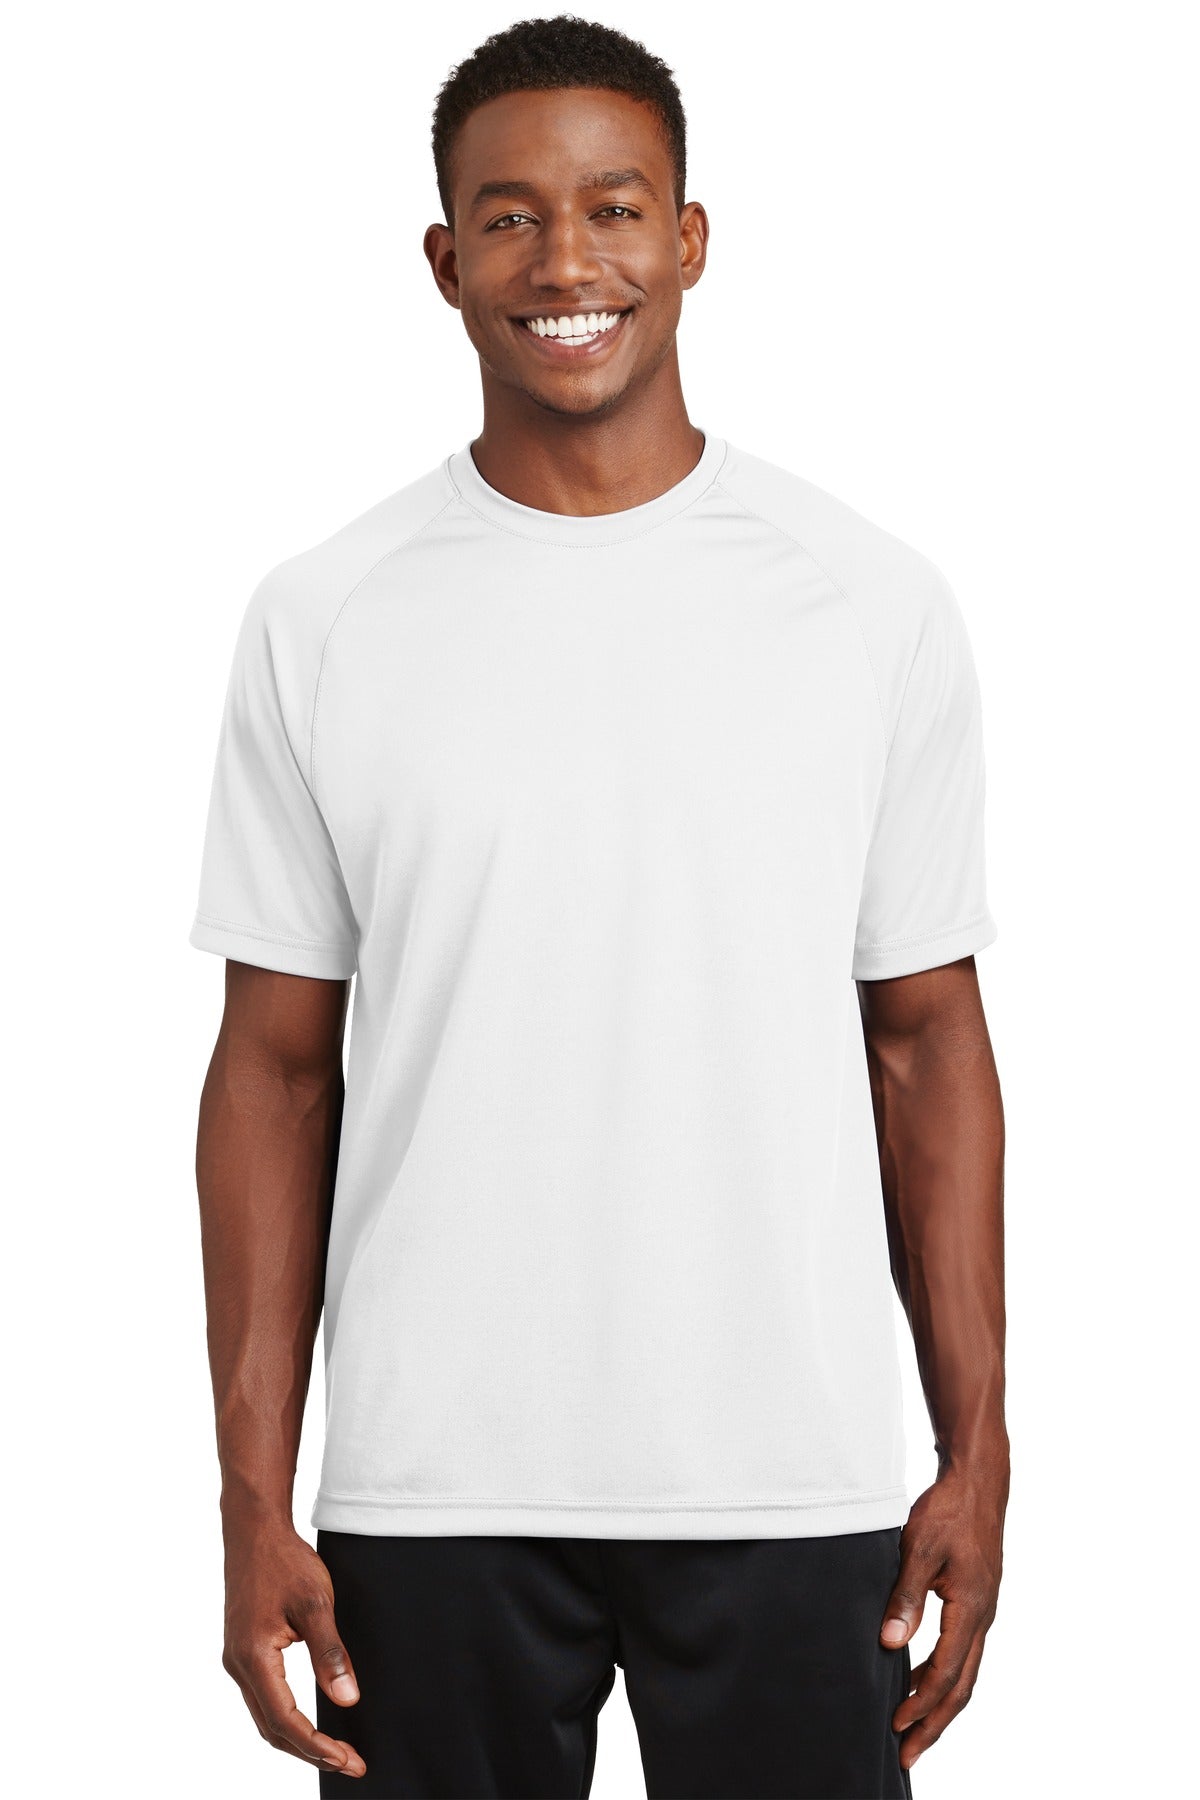 Sport-Tek® Dry Zone® Short Sleeve Raglan T-Shirt. T473